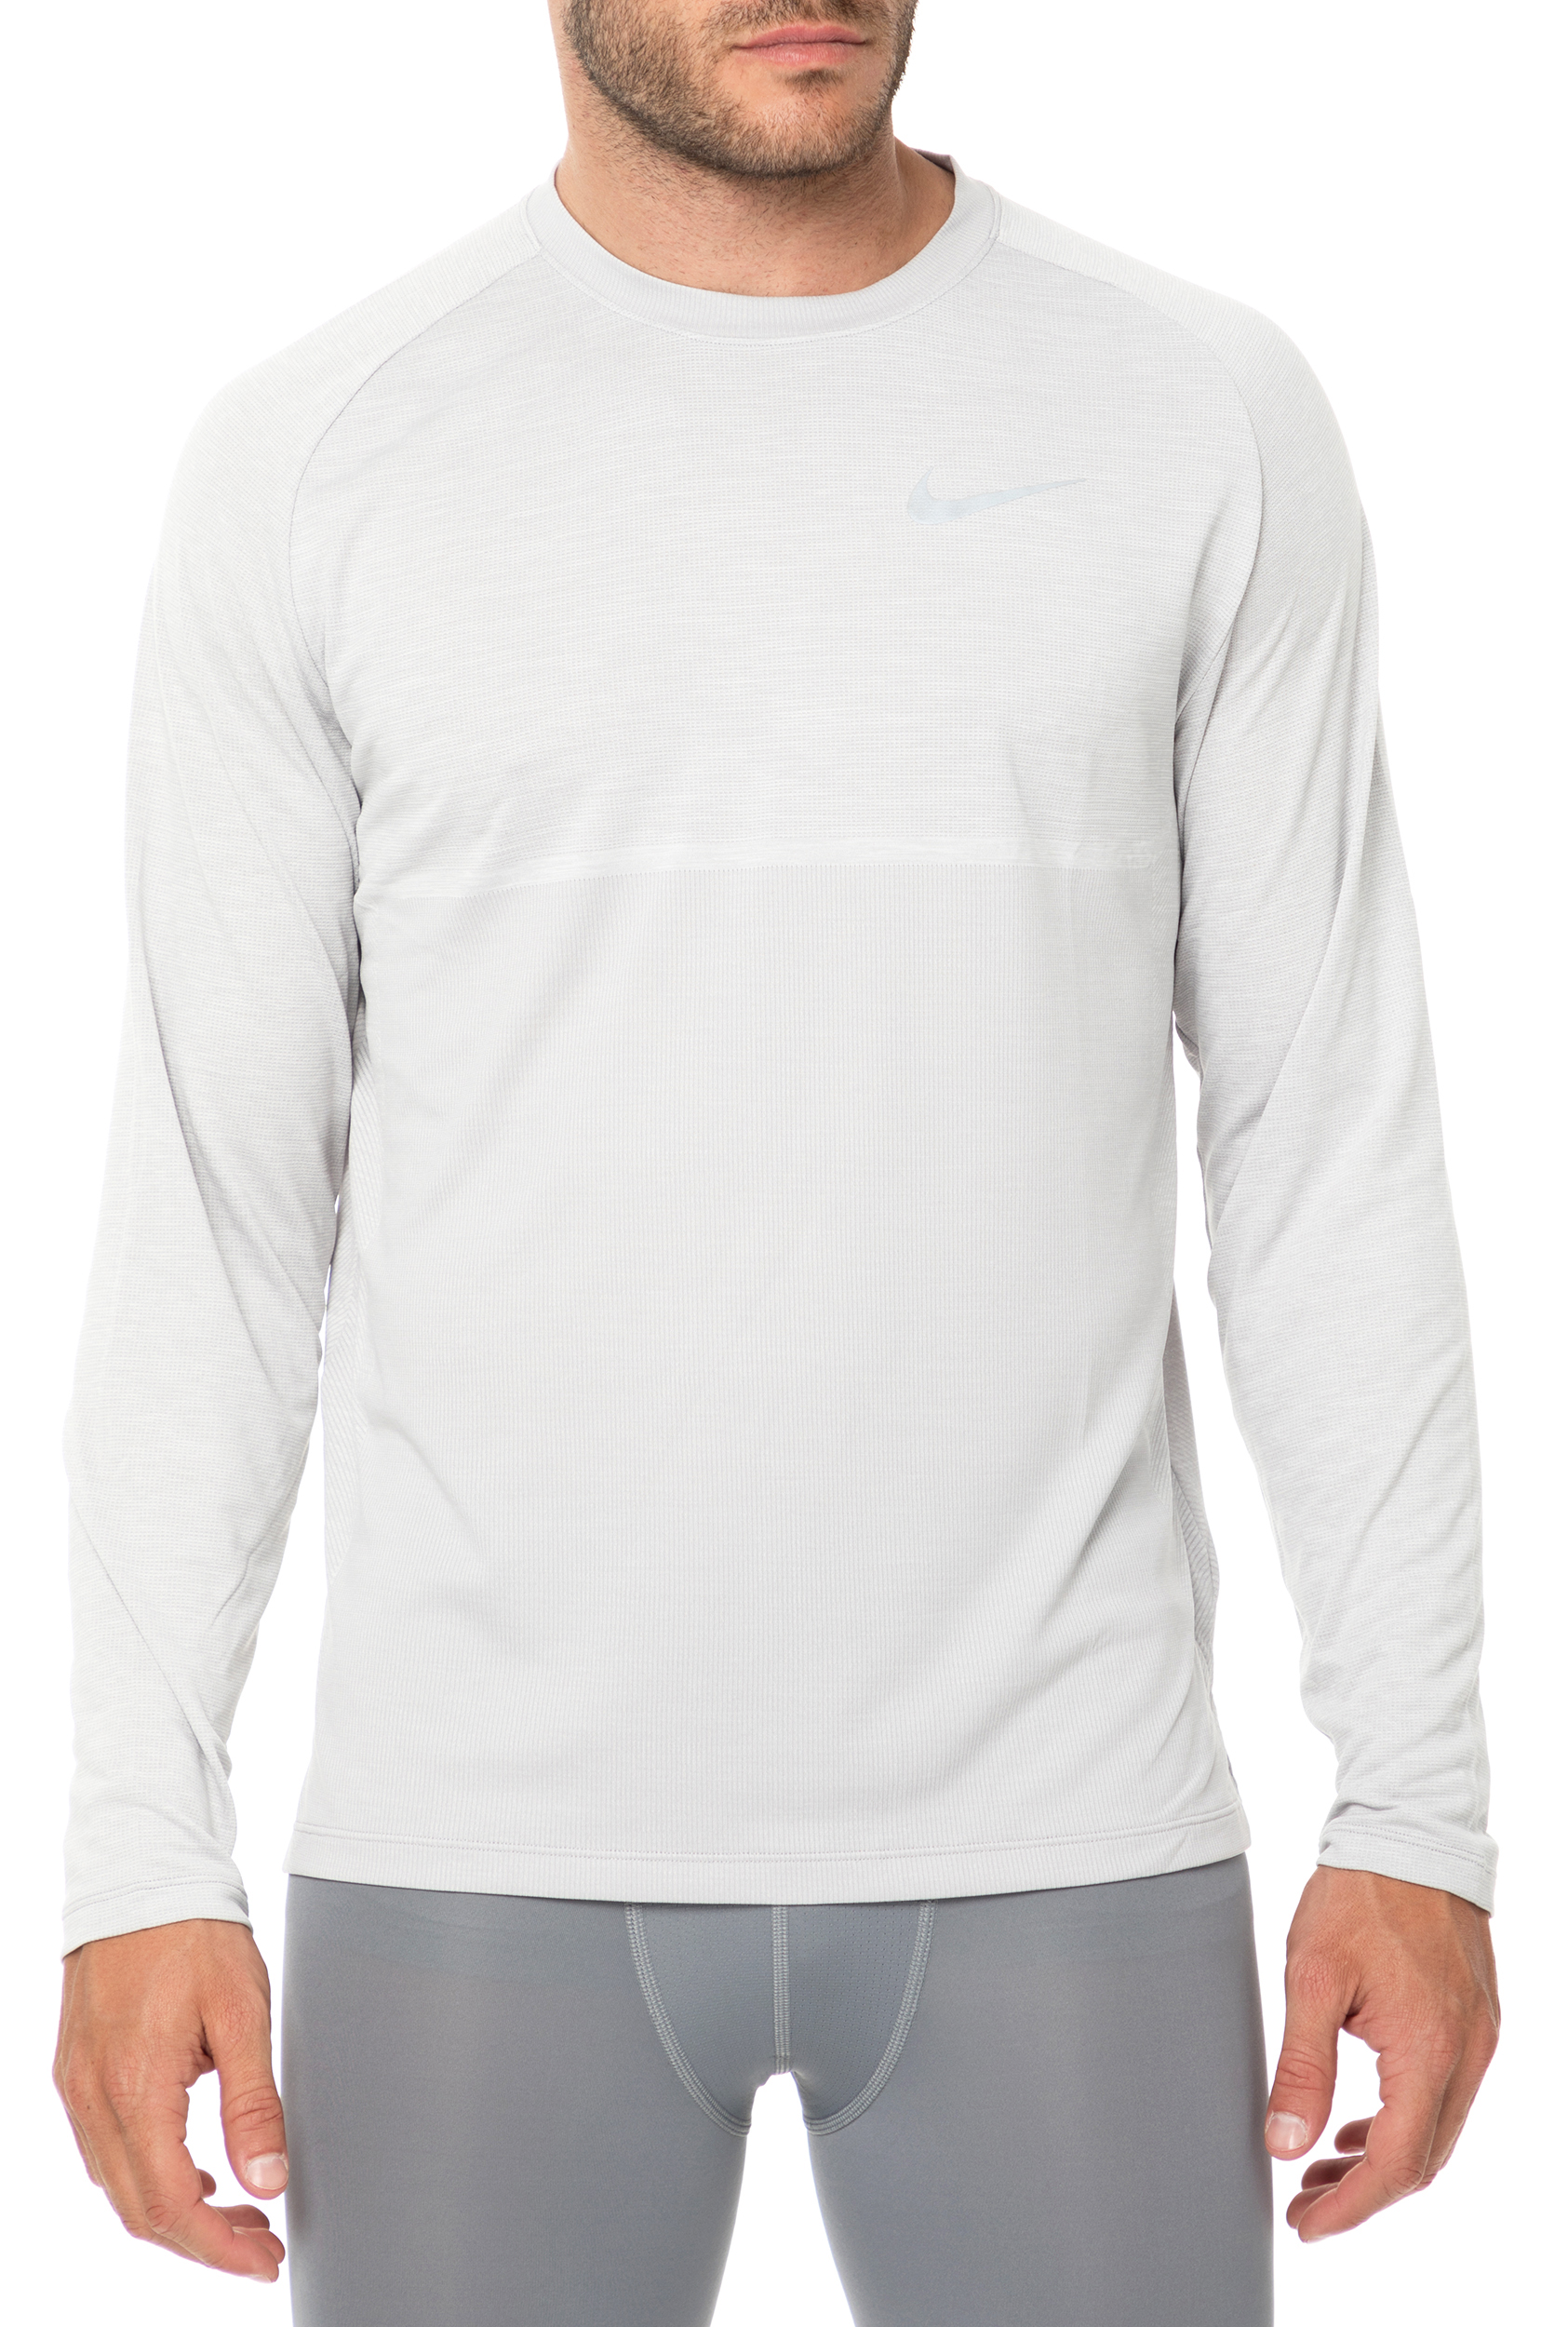 NIKE - Ανδρική μακρυμάνικη μπλούζα Nike DRY MEDALIST λευκή Ανδρικά/Ρούχα/Αθλητικά/Φούτερ-Μακρυμάνικα